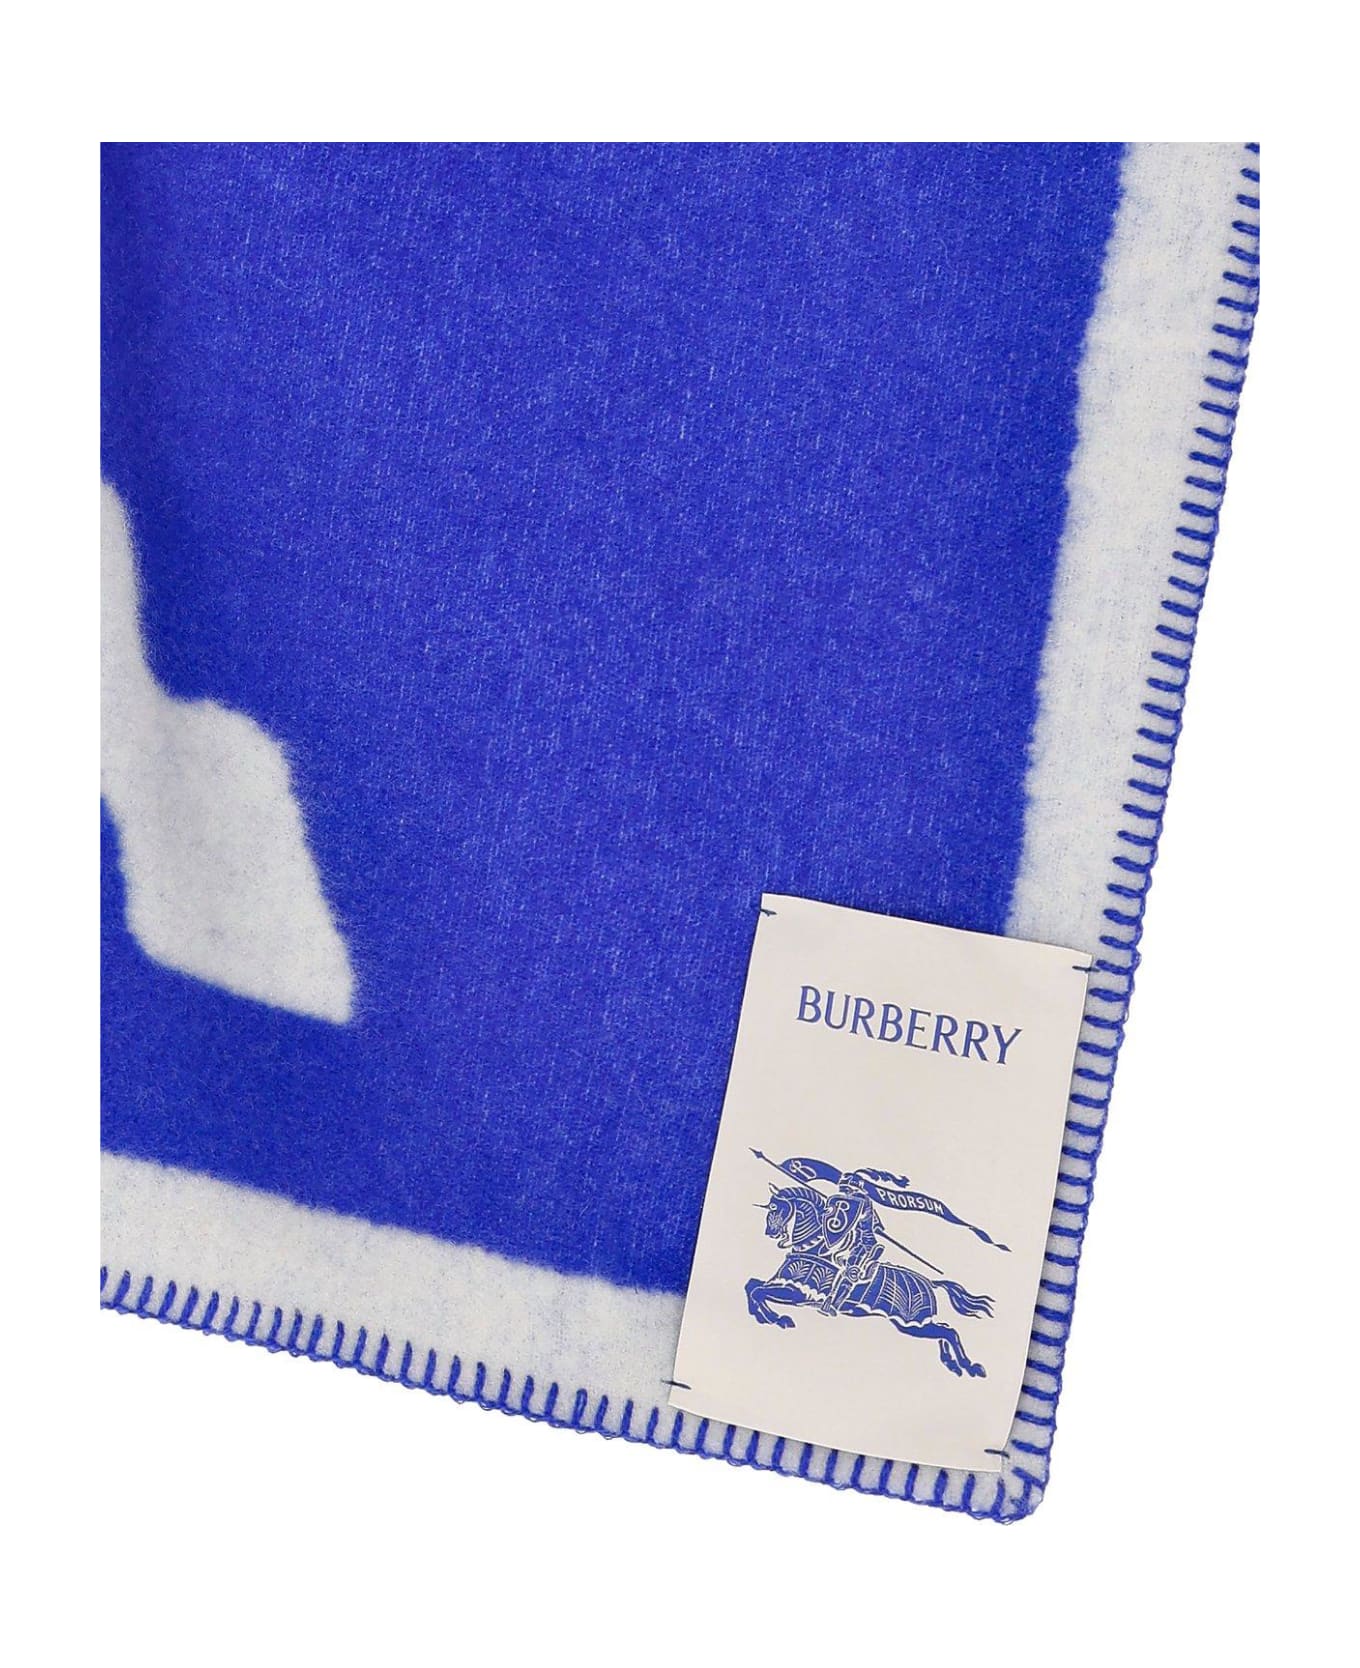 Burberry Ekd Jacquard Blanket - KNIGHT